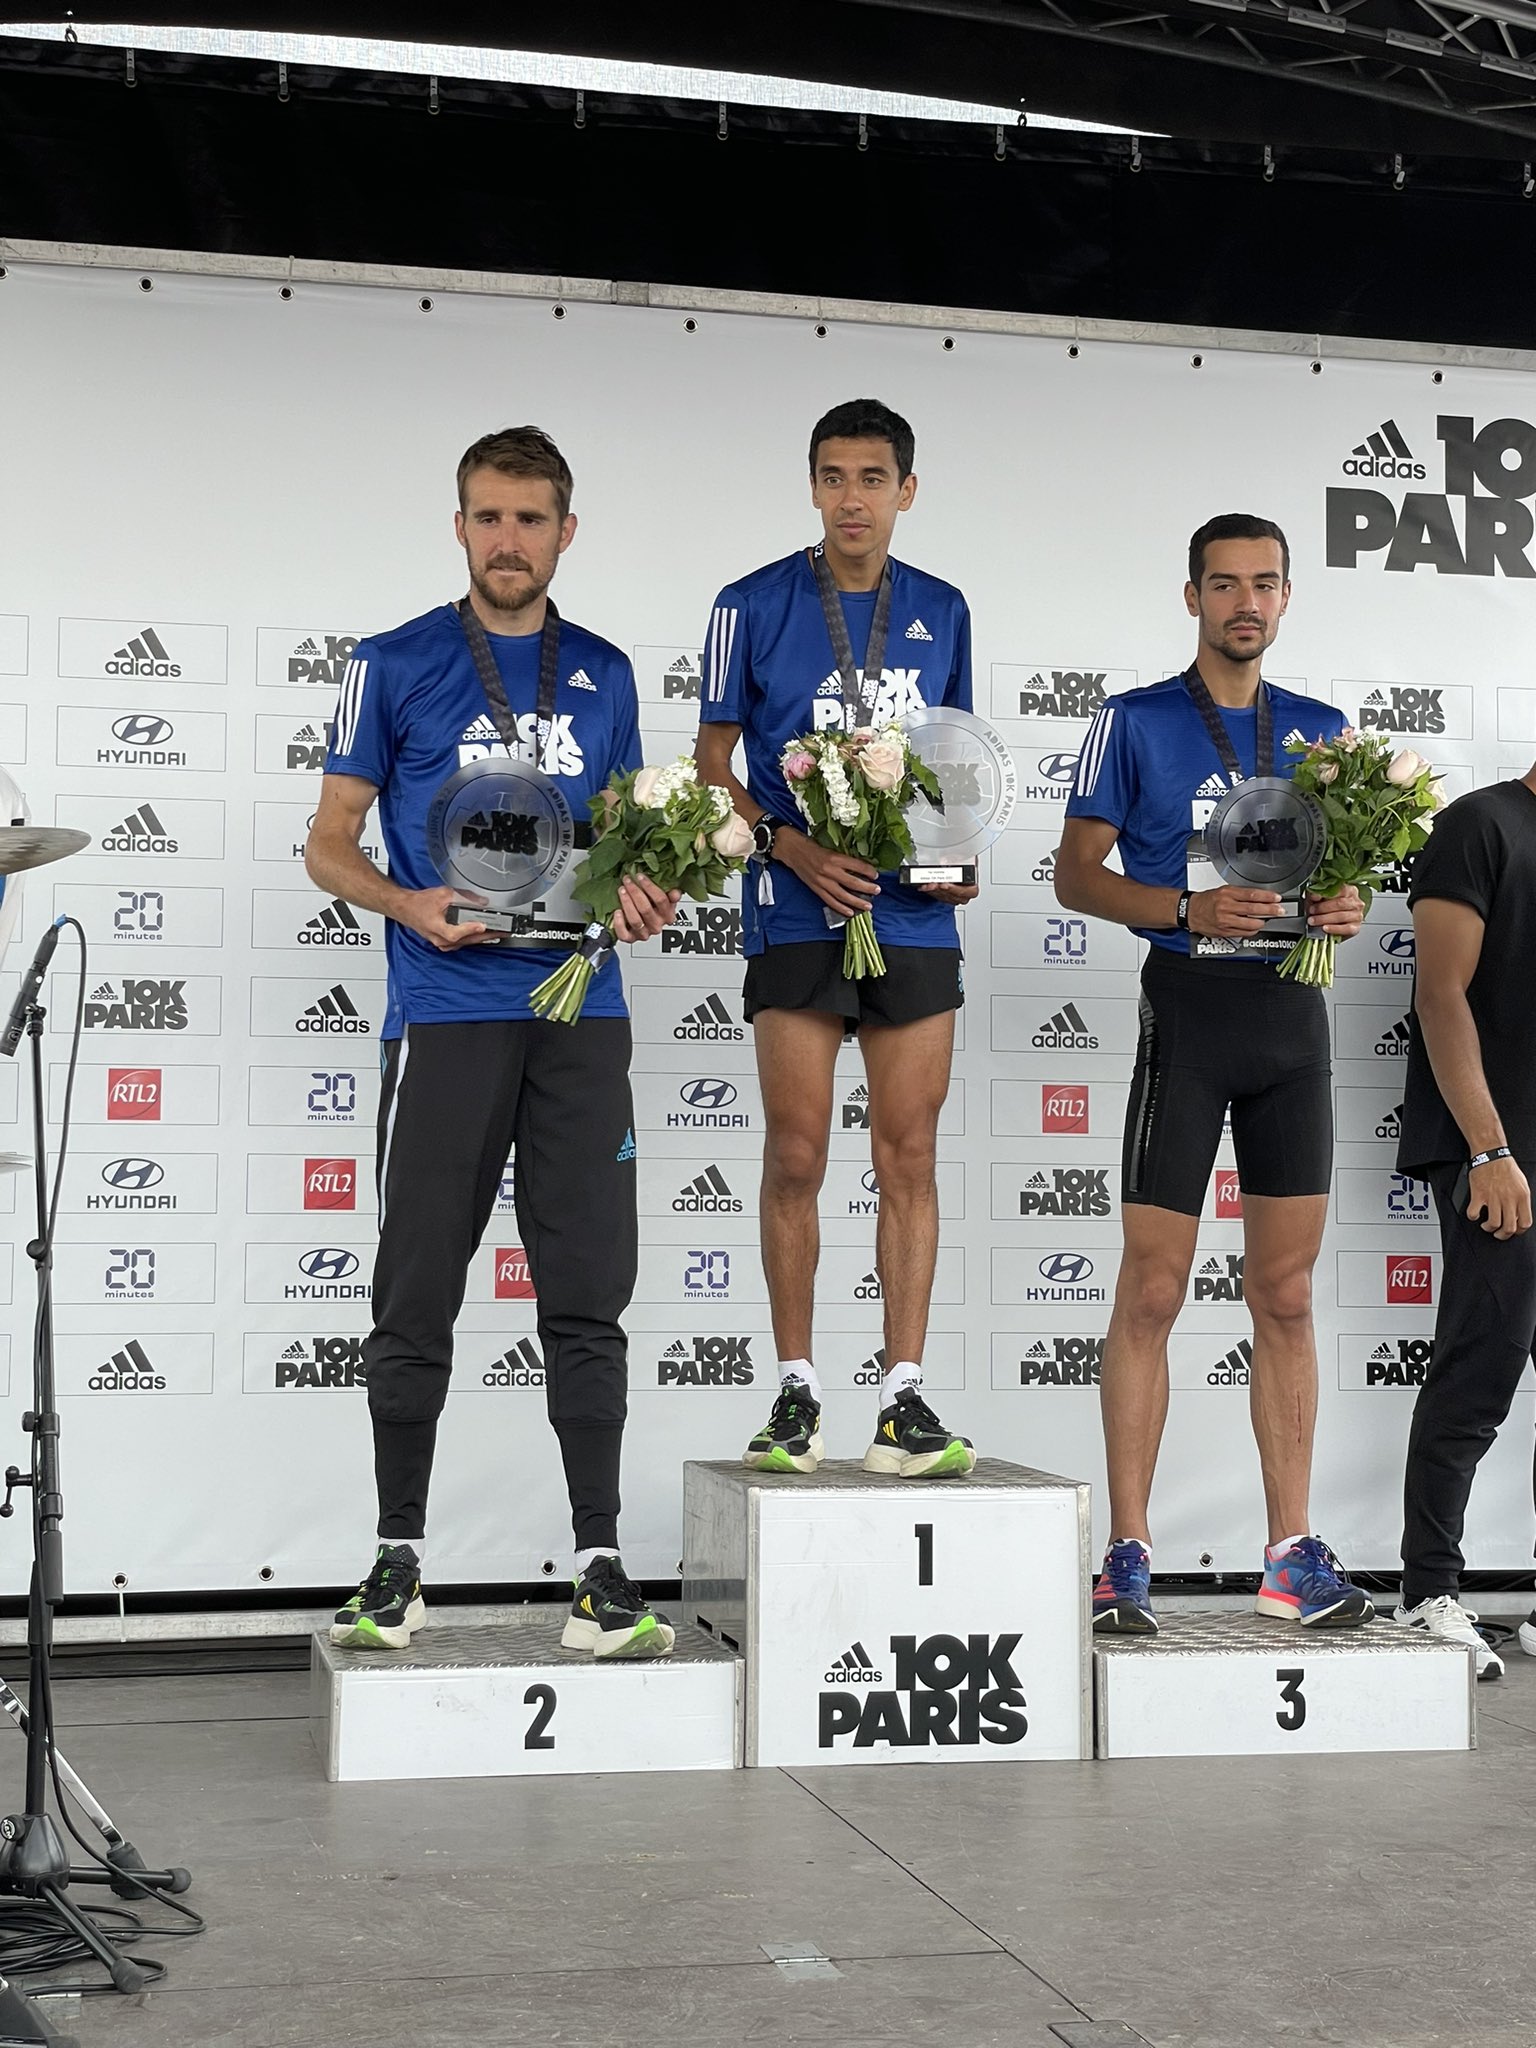 Résultats de l'Adidas 10K Paris - Vo2